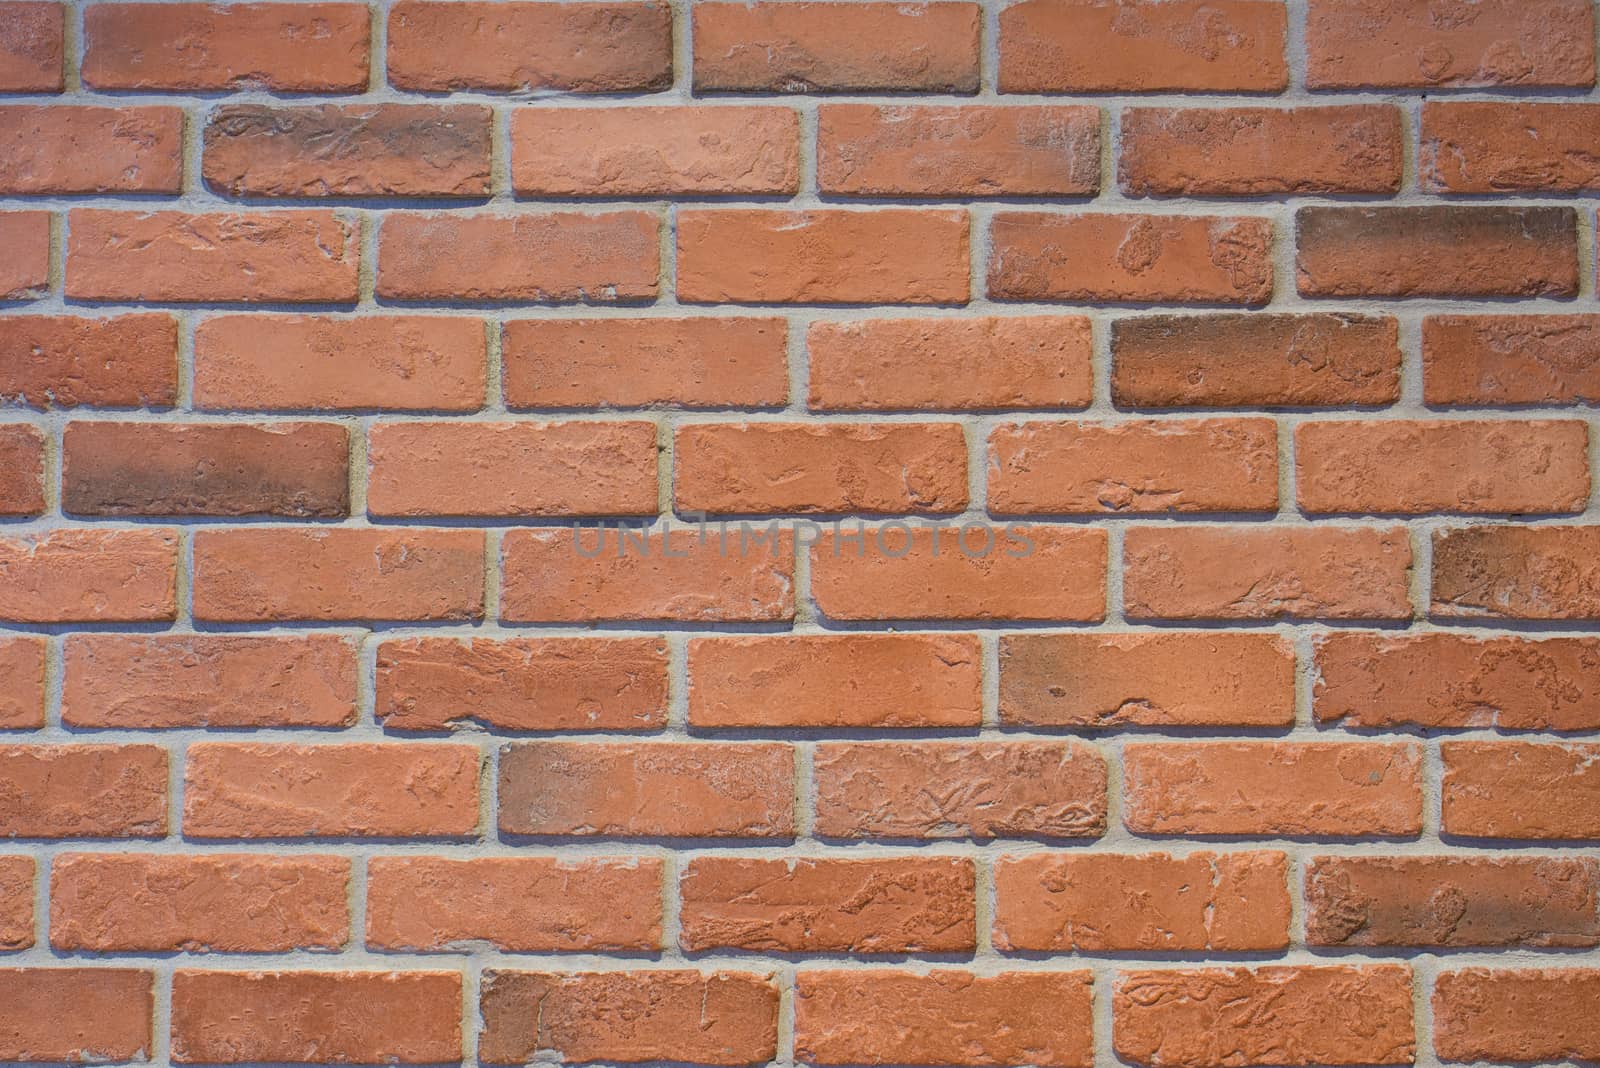 Vintage Brick Wall Background - Texture